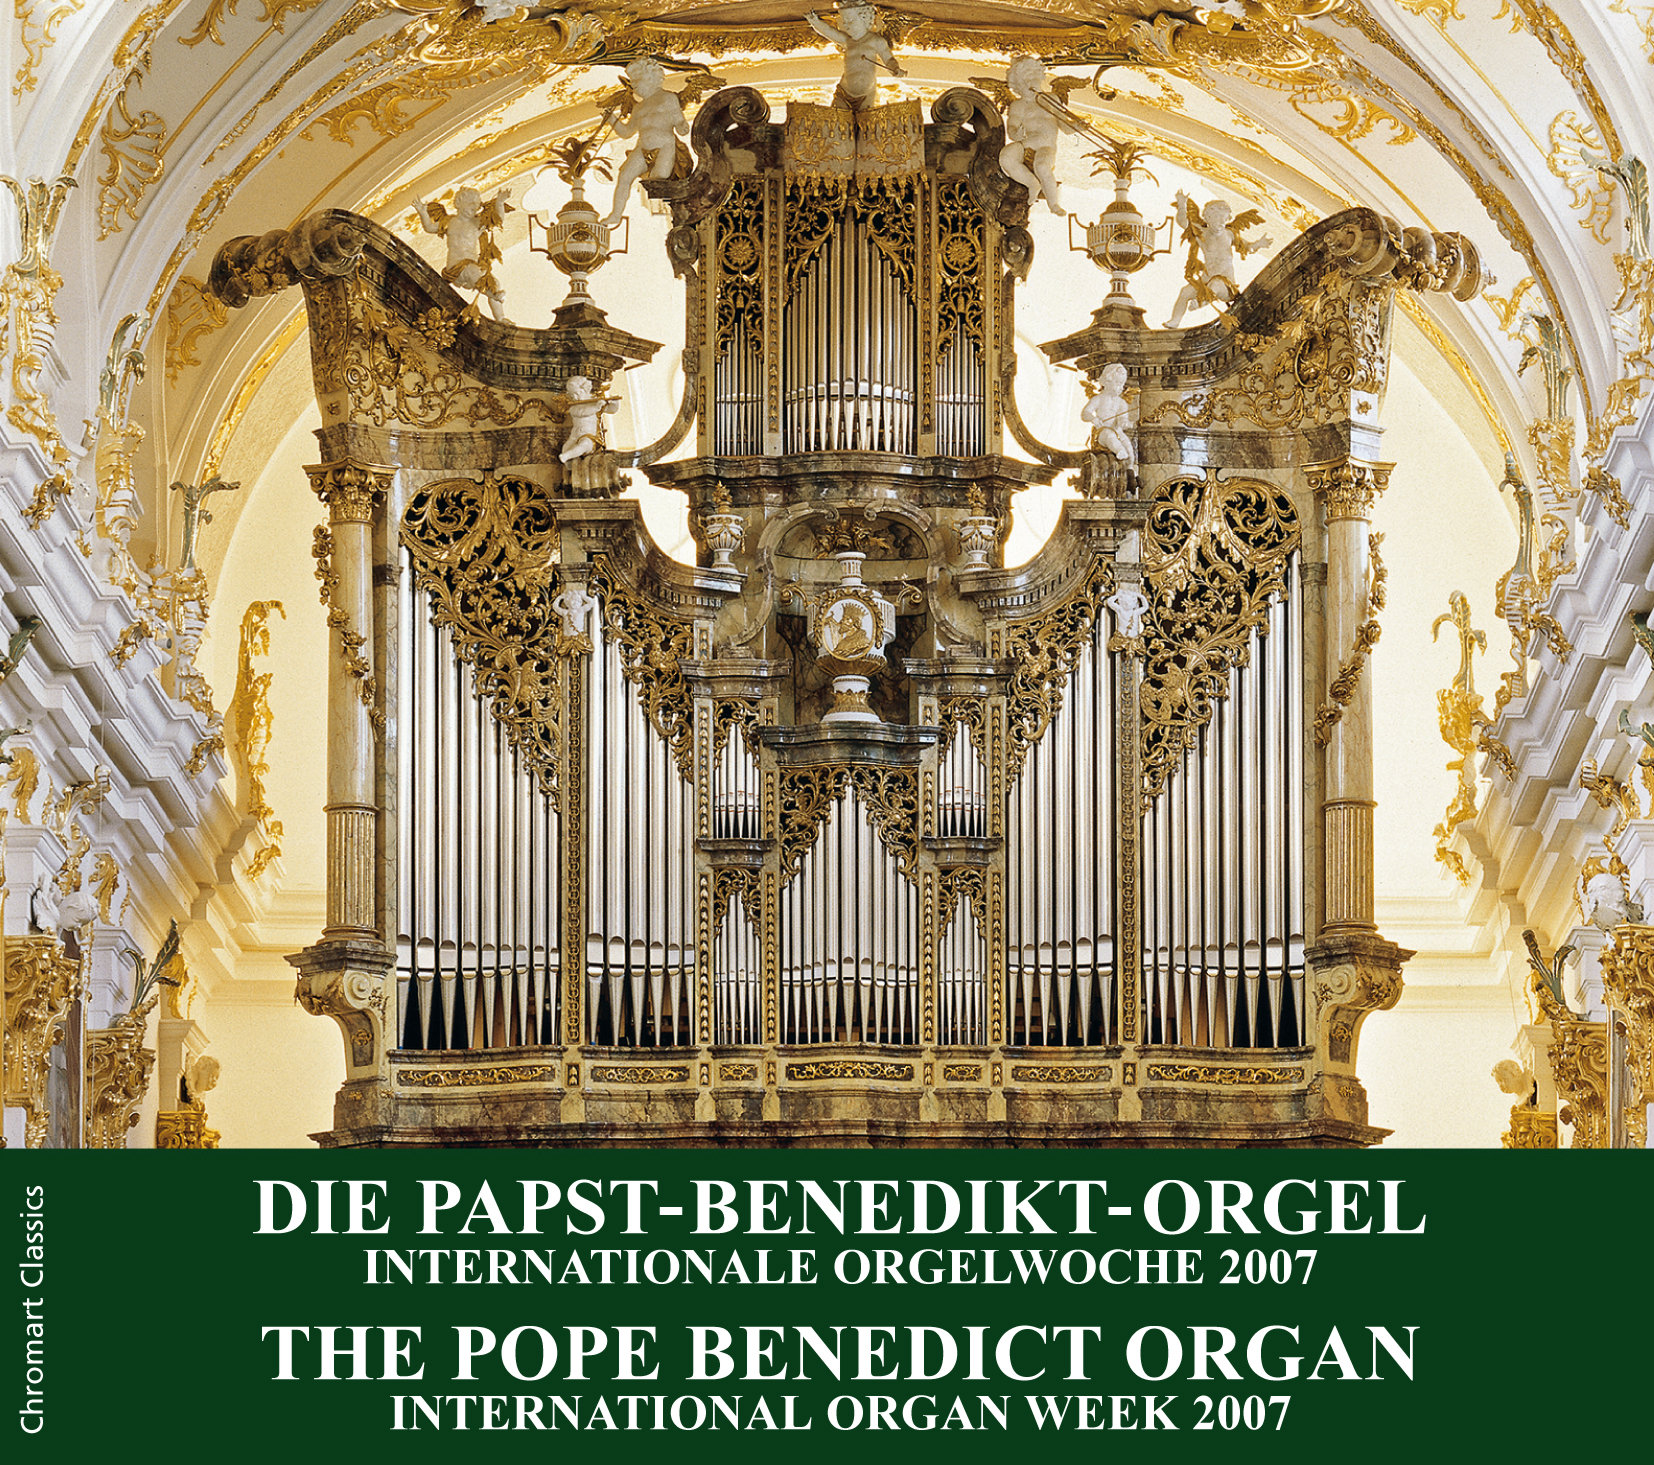 The Pope Benedict Organ - Int. Organ Week 2007